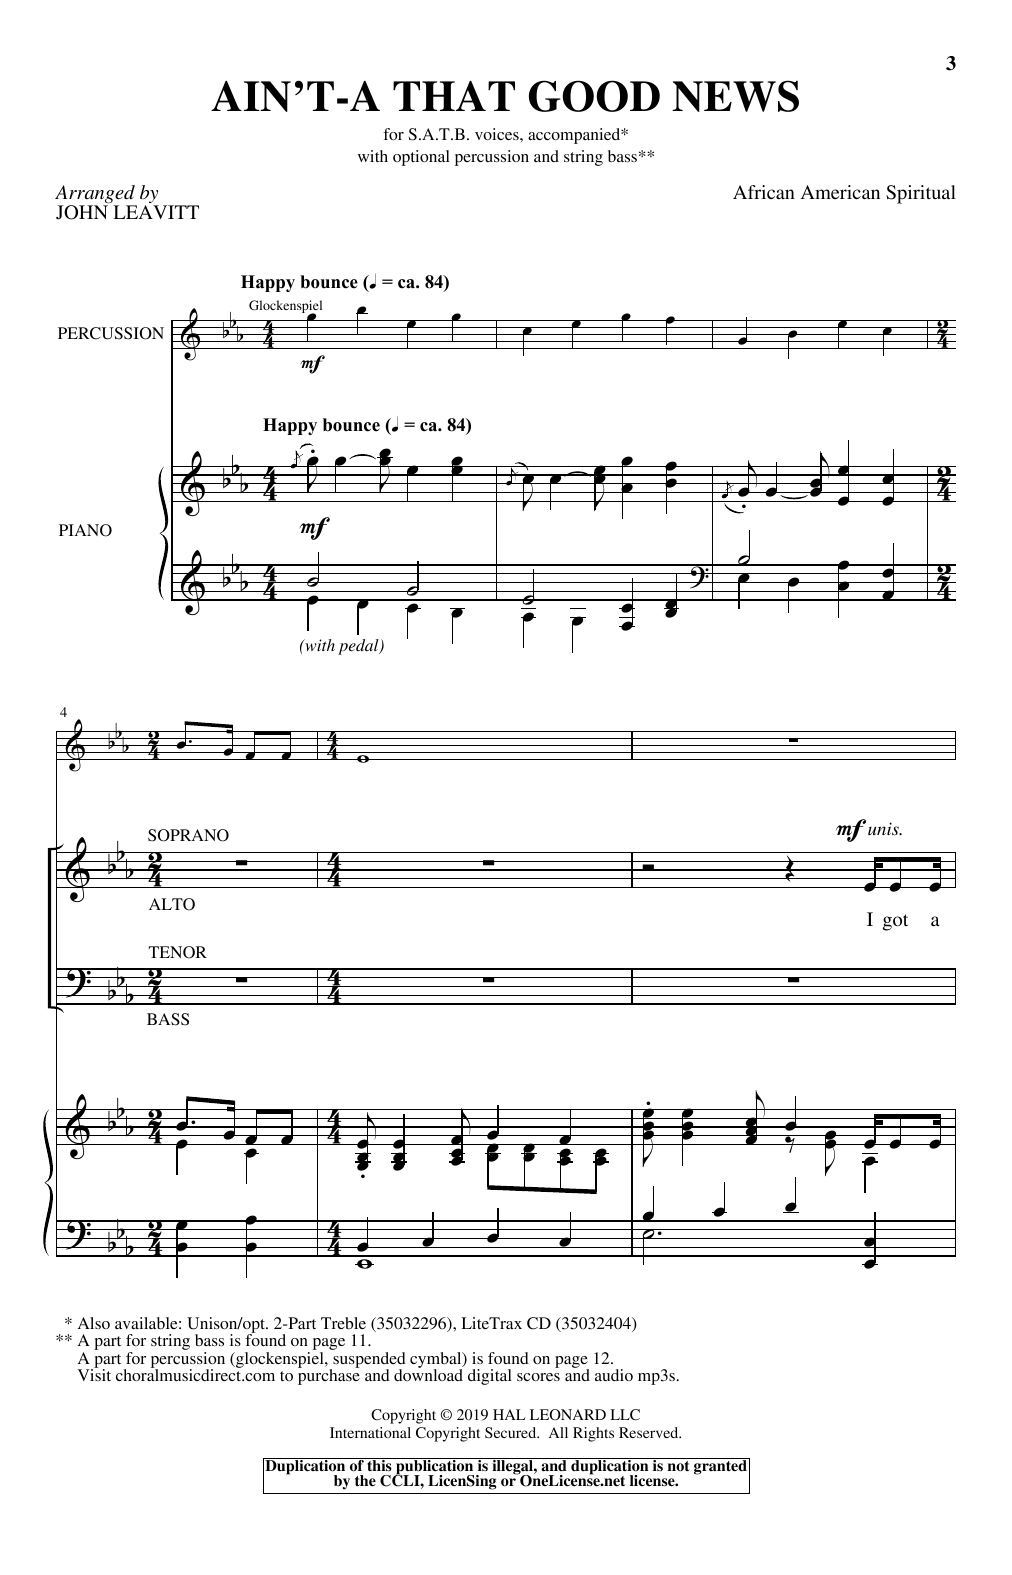 Download John Leavitt Ain't-A That Good News Sheet Music and learn how to play SATB Choir PDF digital score in minutes